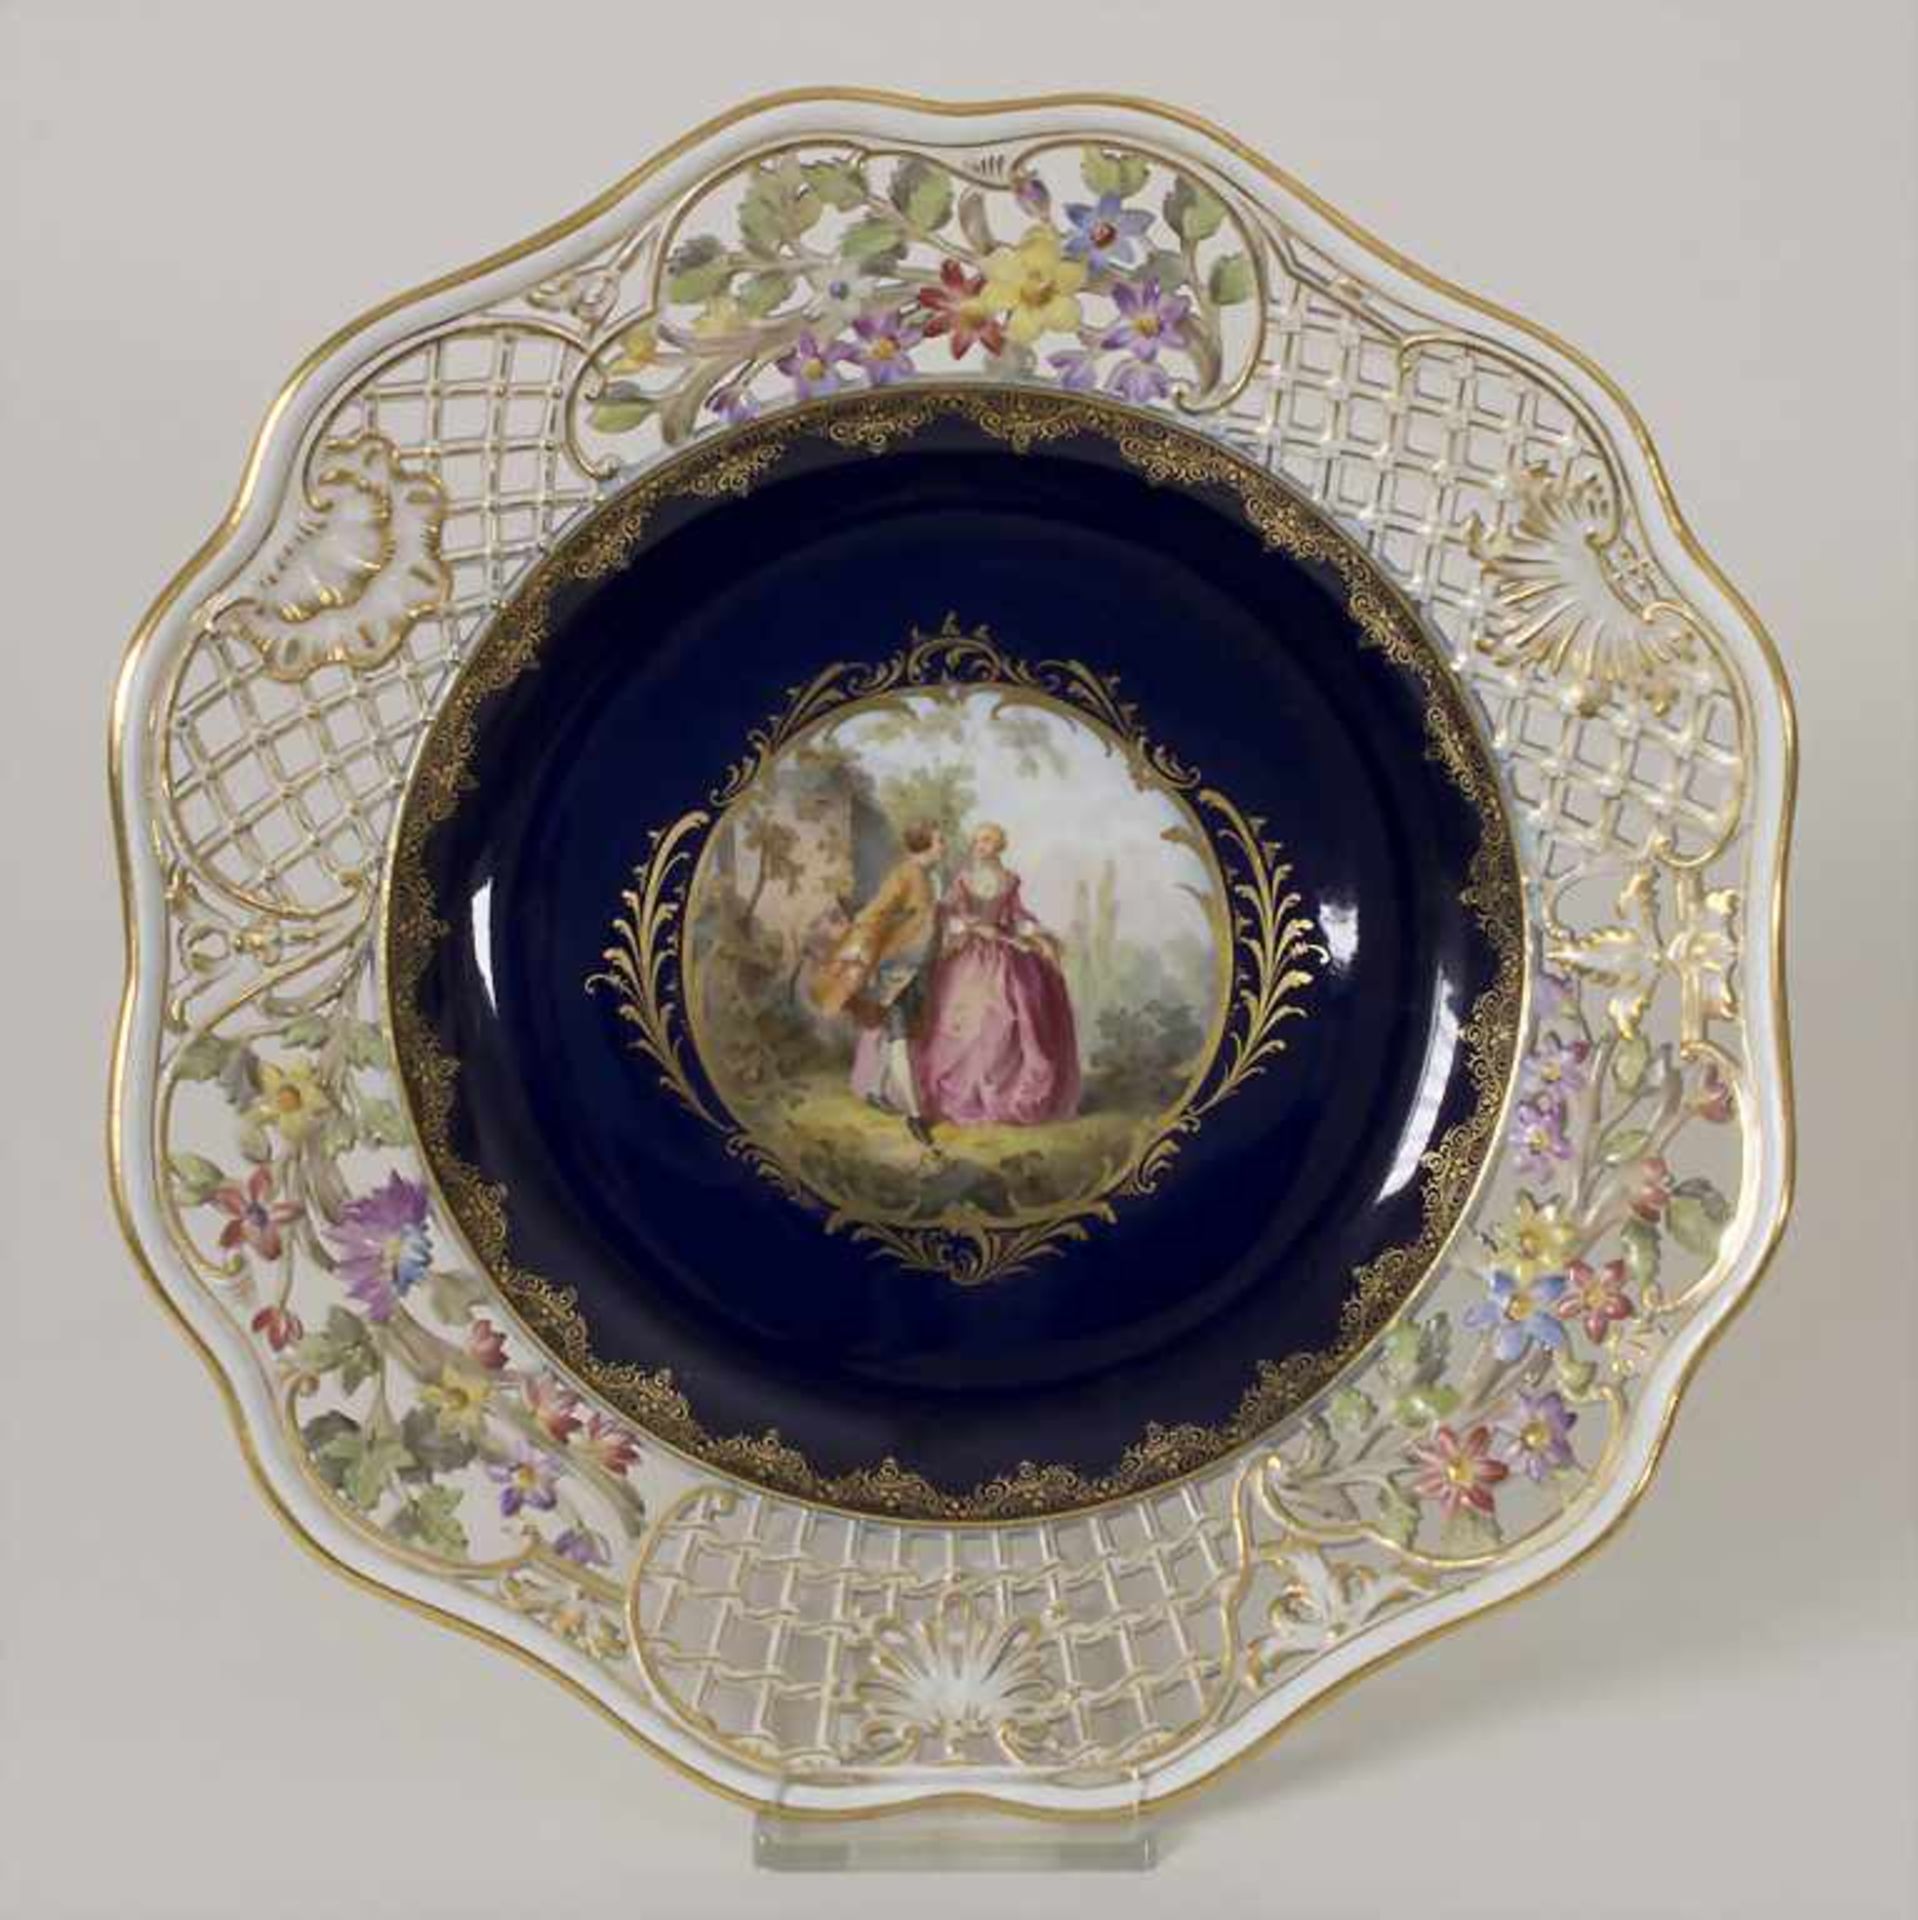 Durchbruchteller mit Galanter Szene / A plate with a galant scene, Meissen, 1860-1924Material: